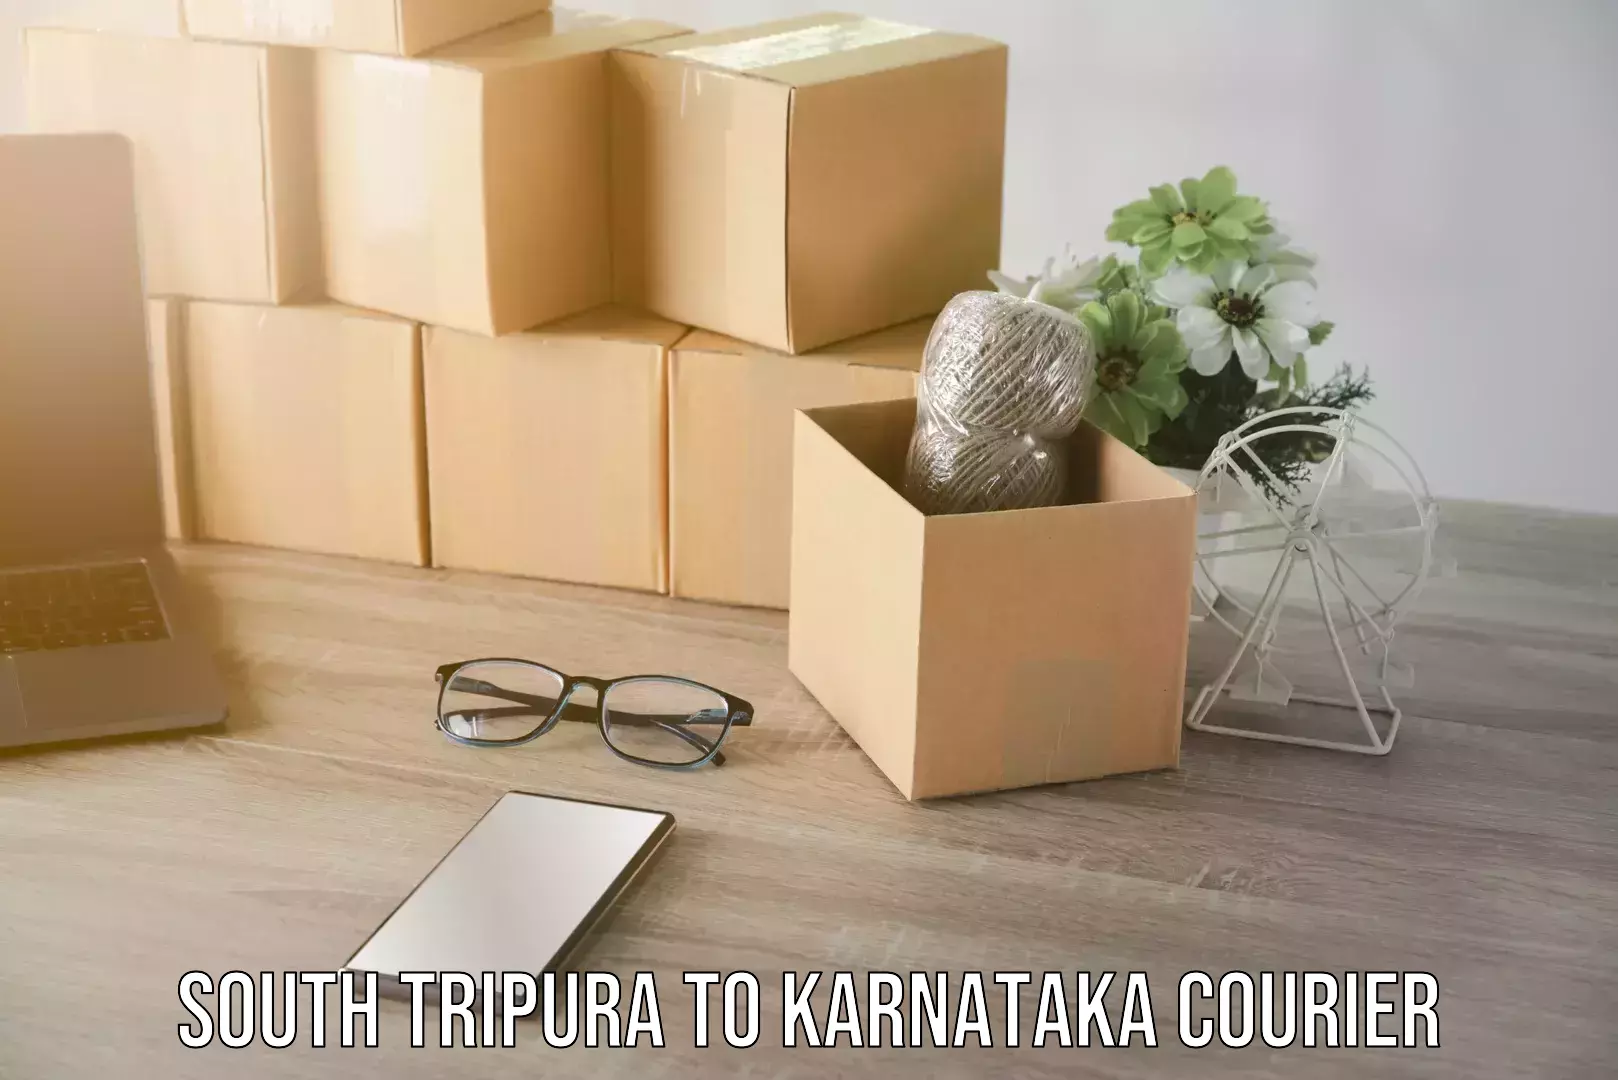 Reliable freight solutions South Tripura to Karnataka